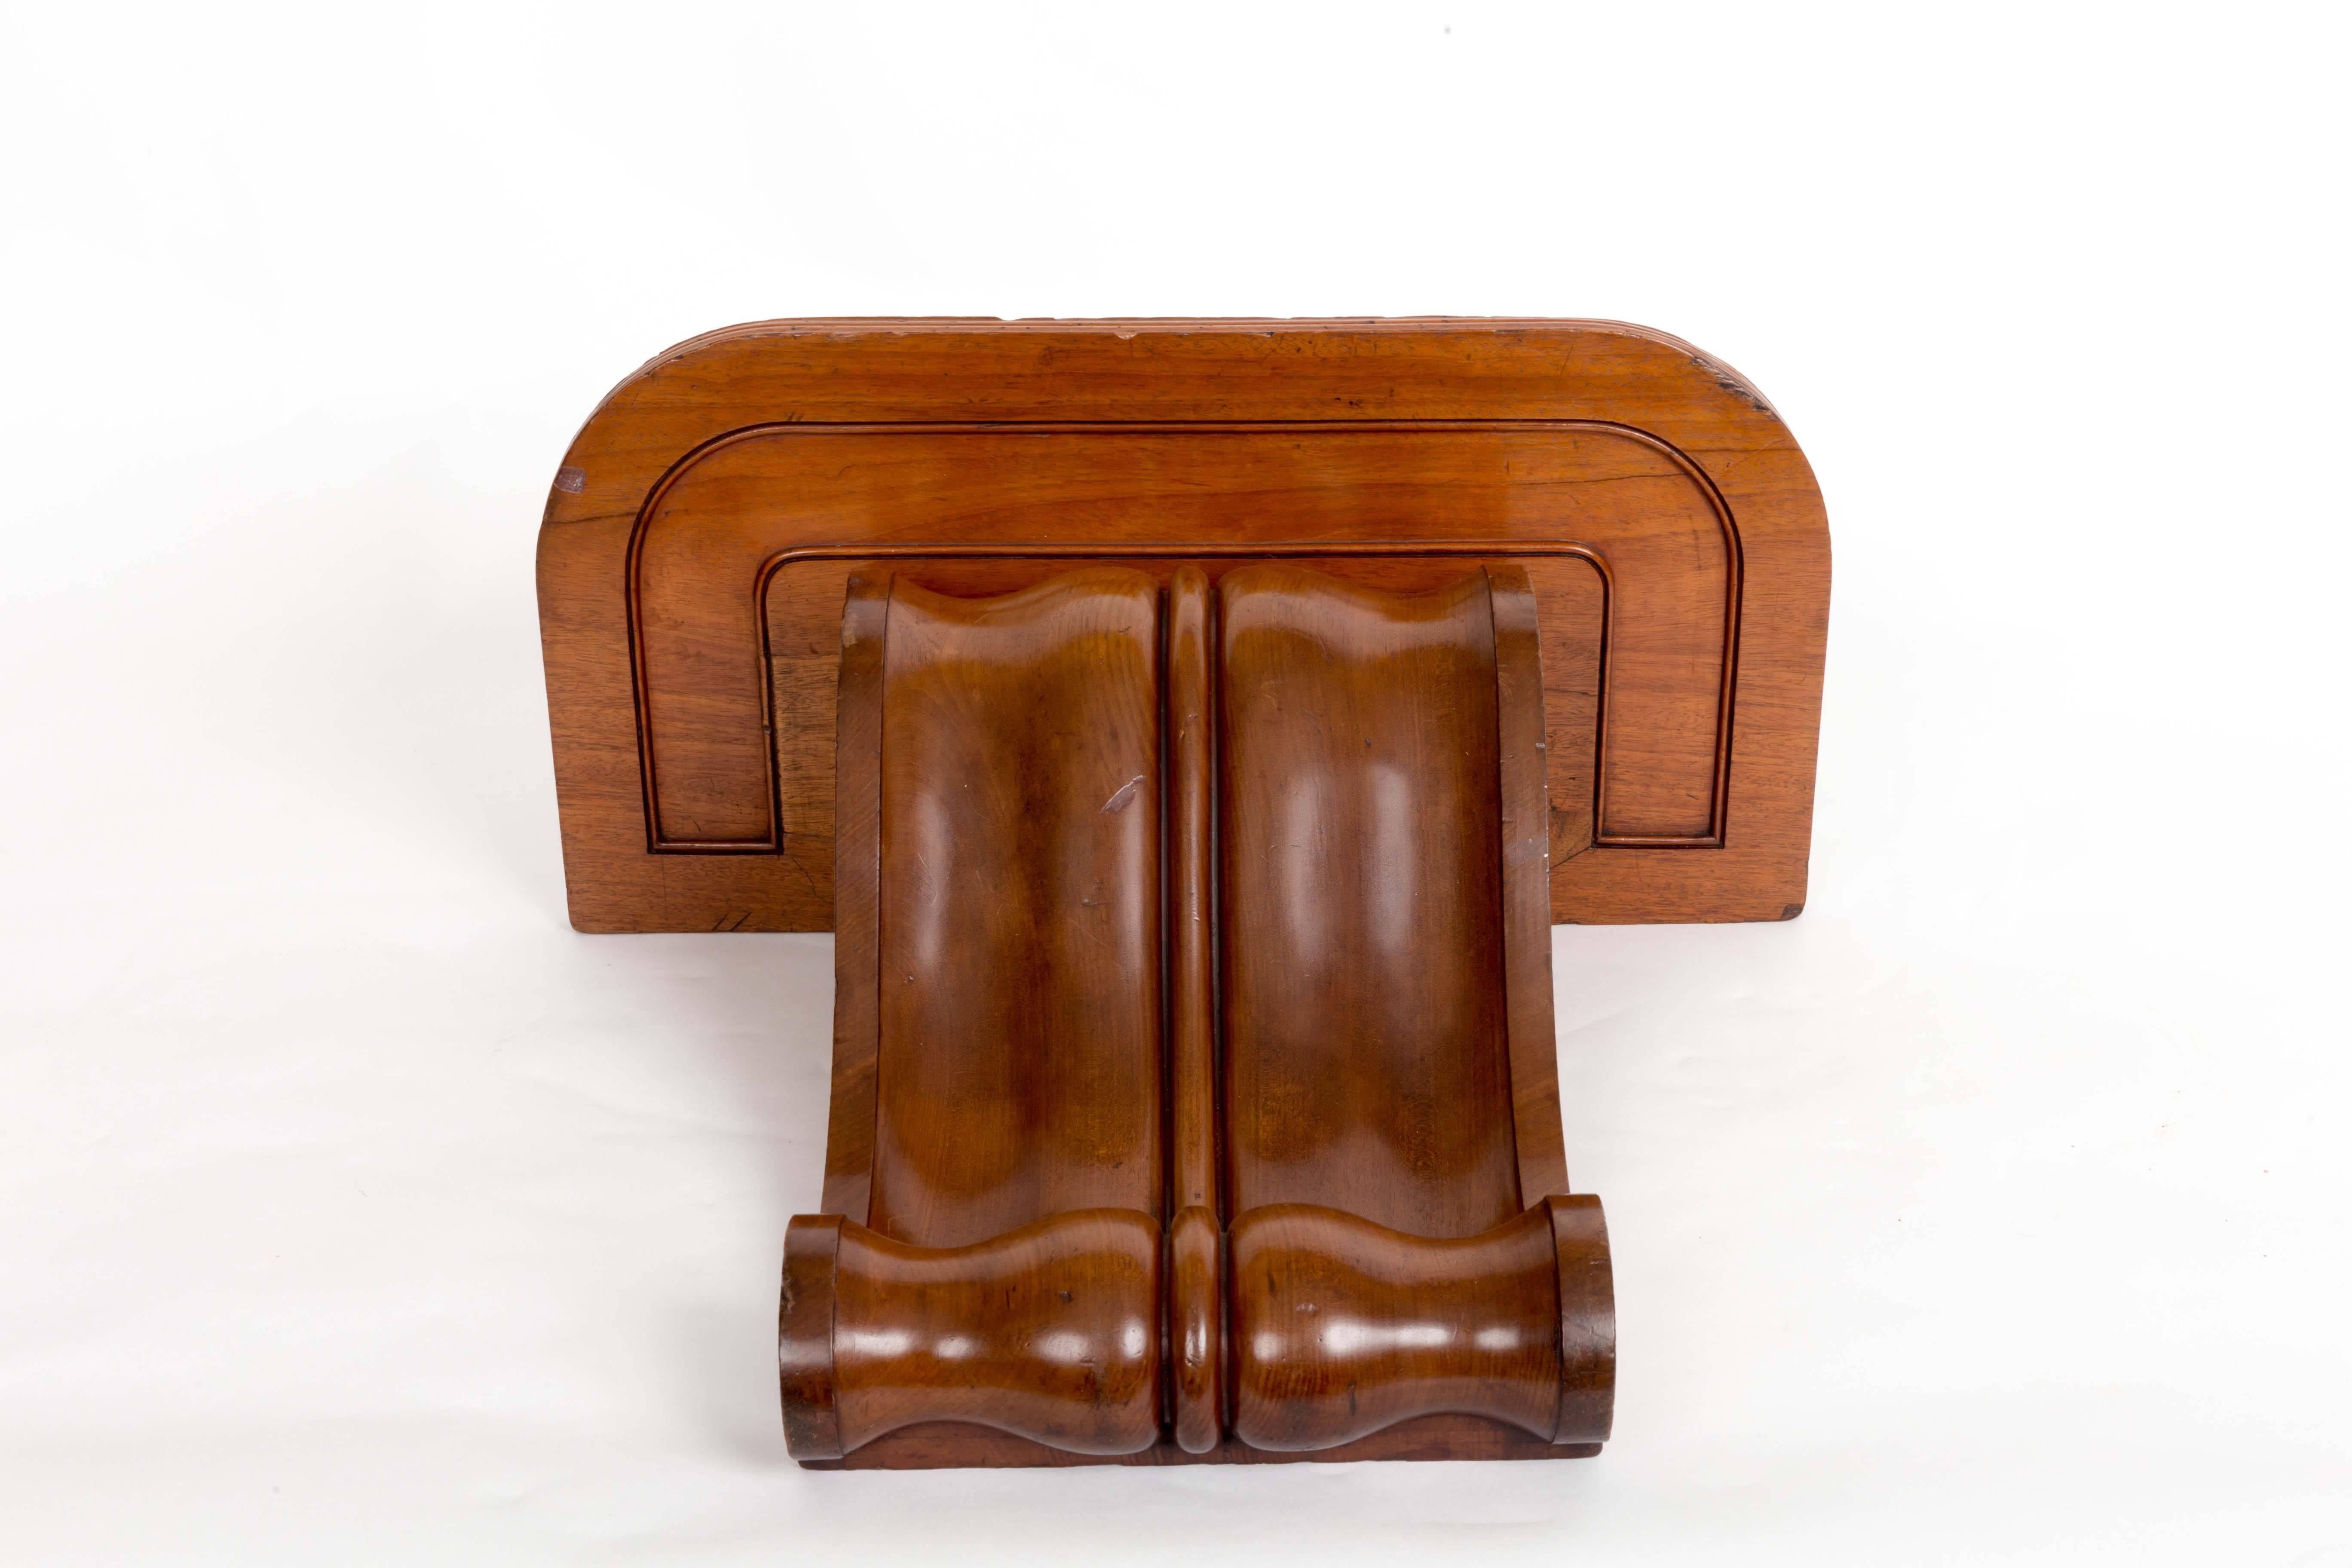 19th century English oversized hand-carved mahogany corbel or bracket shelf.